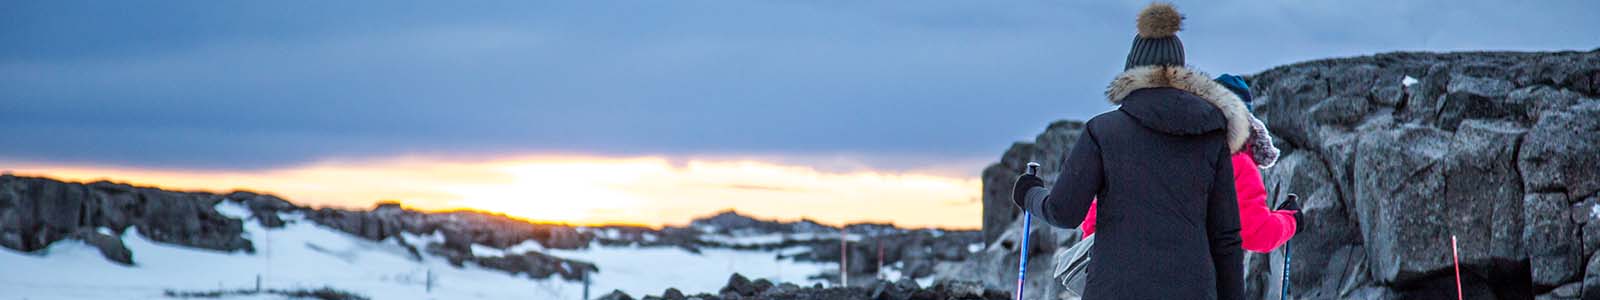 Paklijst IJsland winter: dé vakantie checklist